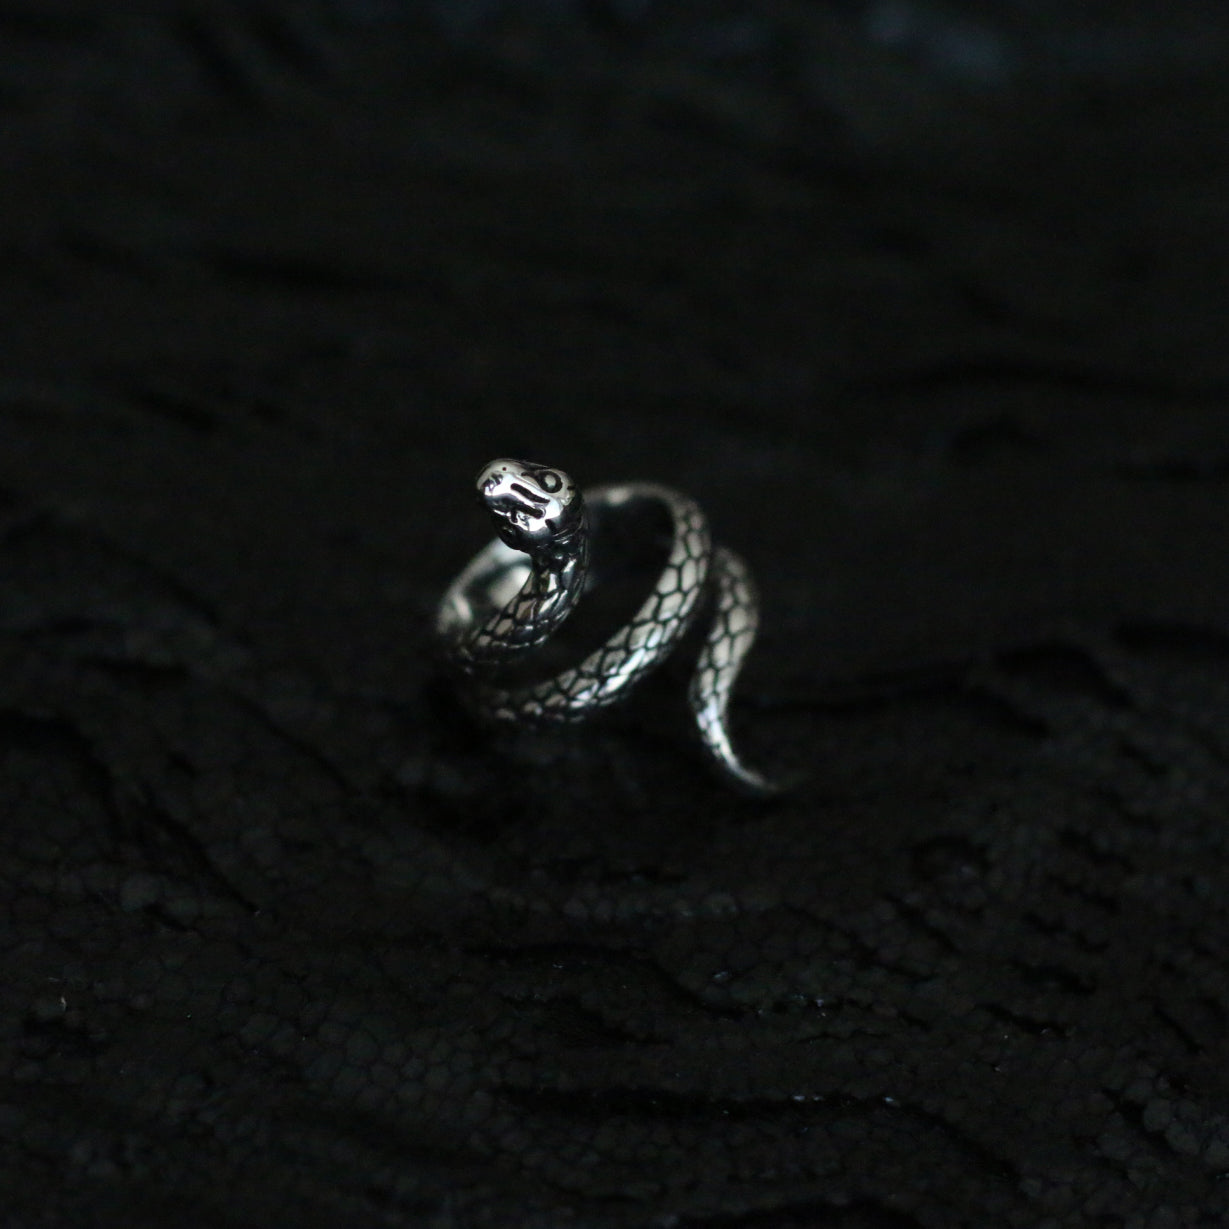 Monora Dark Gothic *Coiled Python Snake* Ring